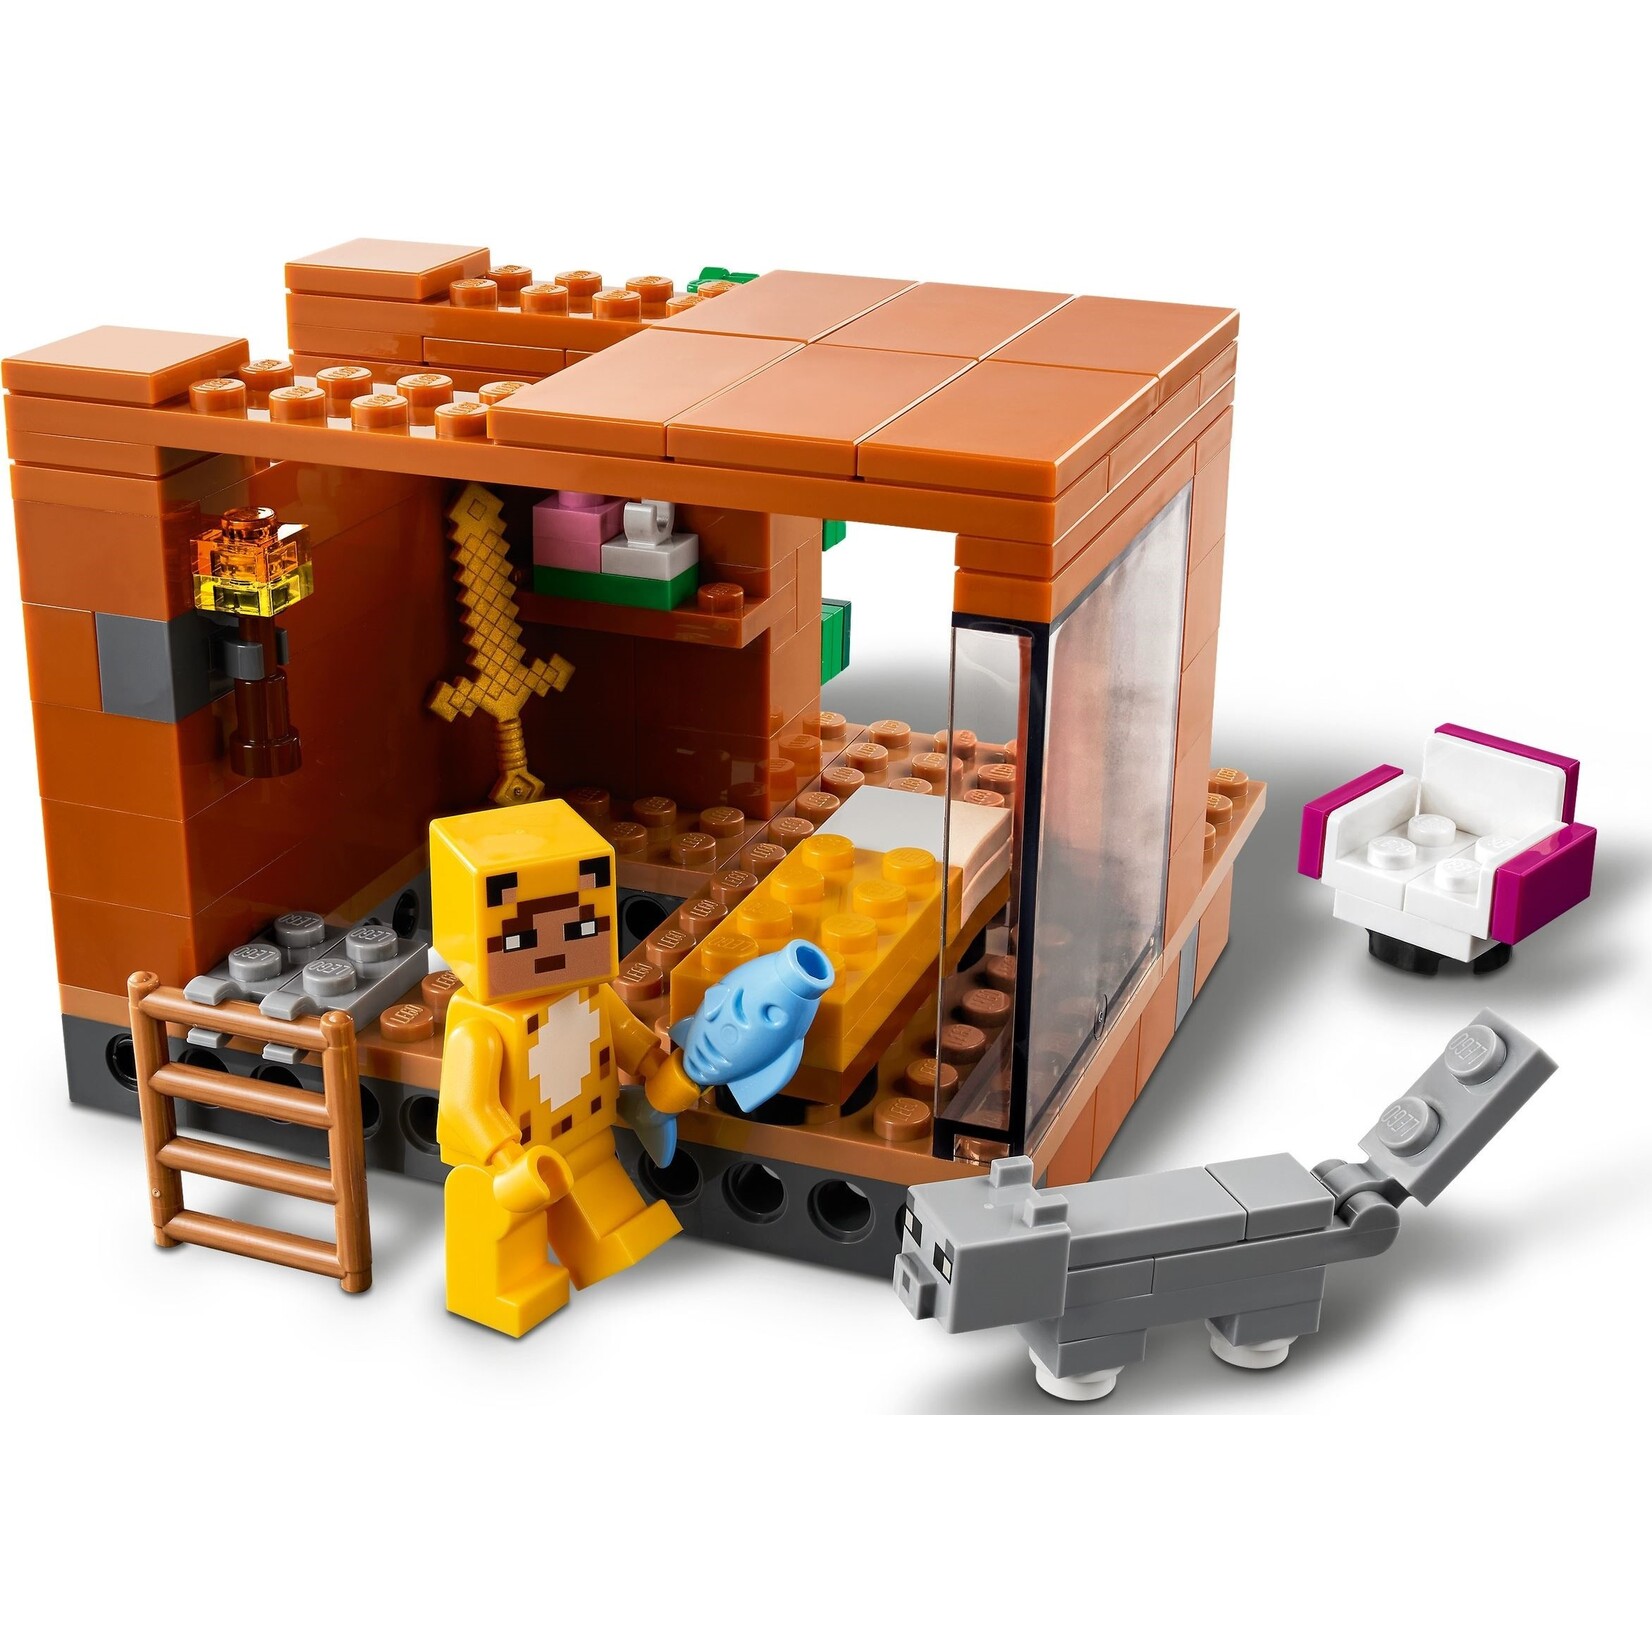 LEGO De moderne boomhut - 21174